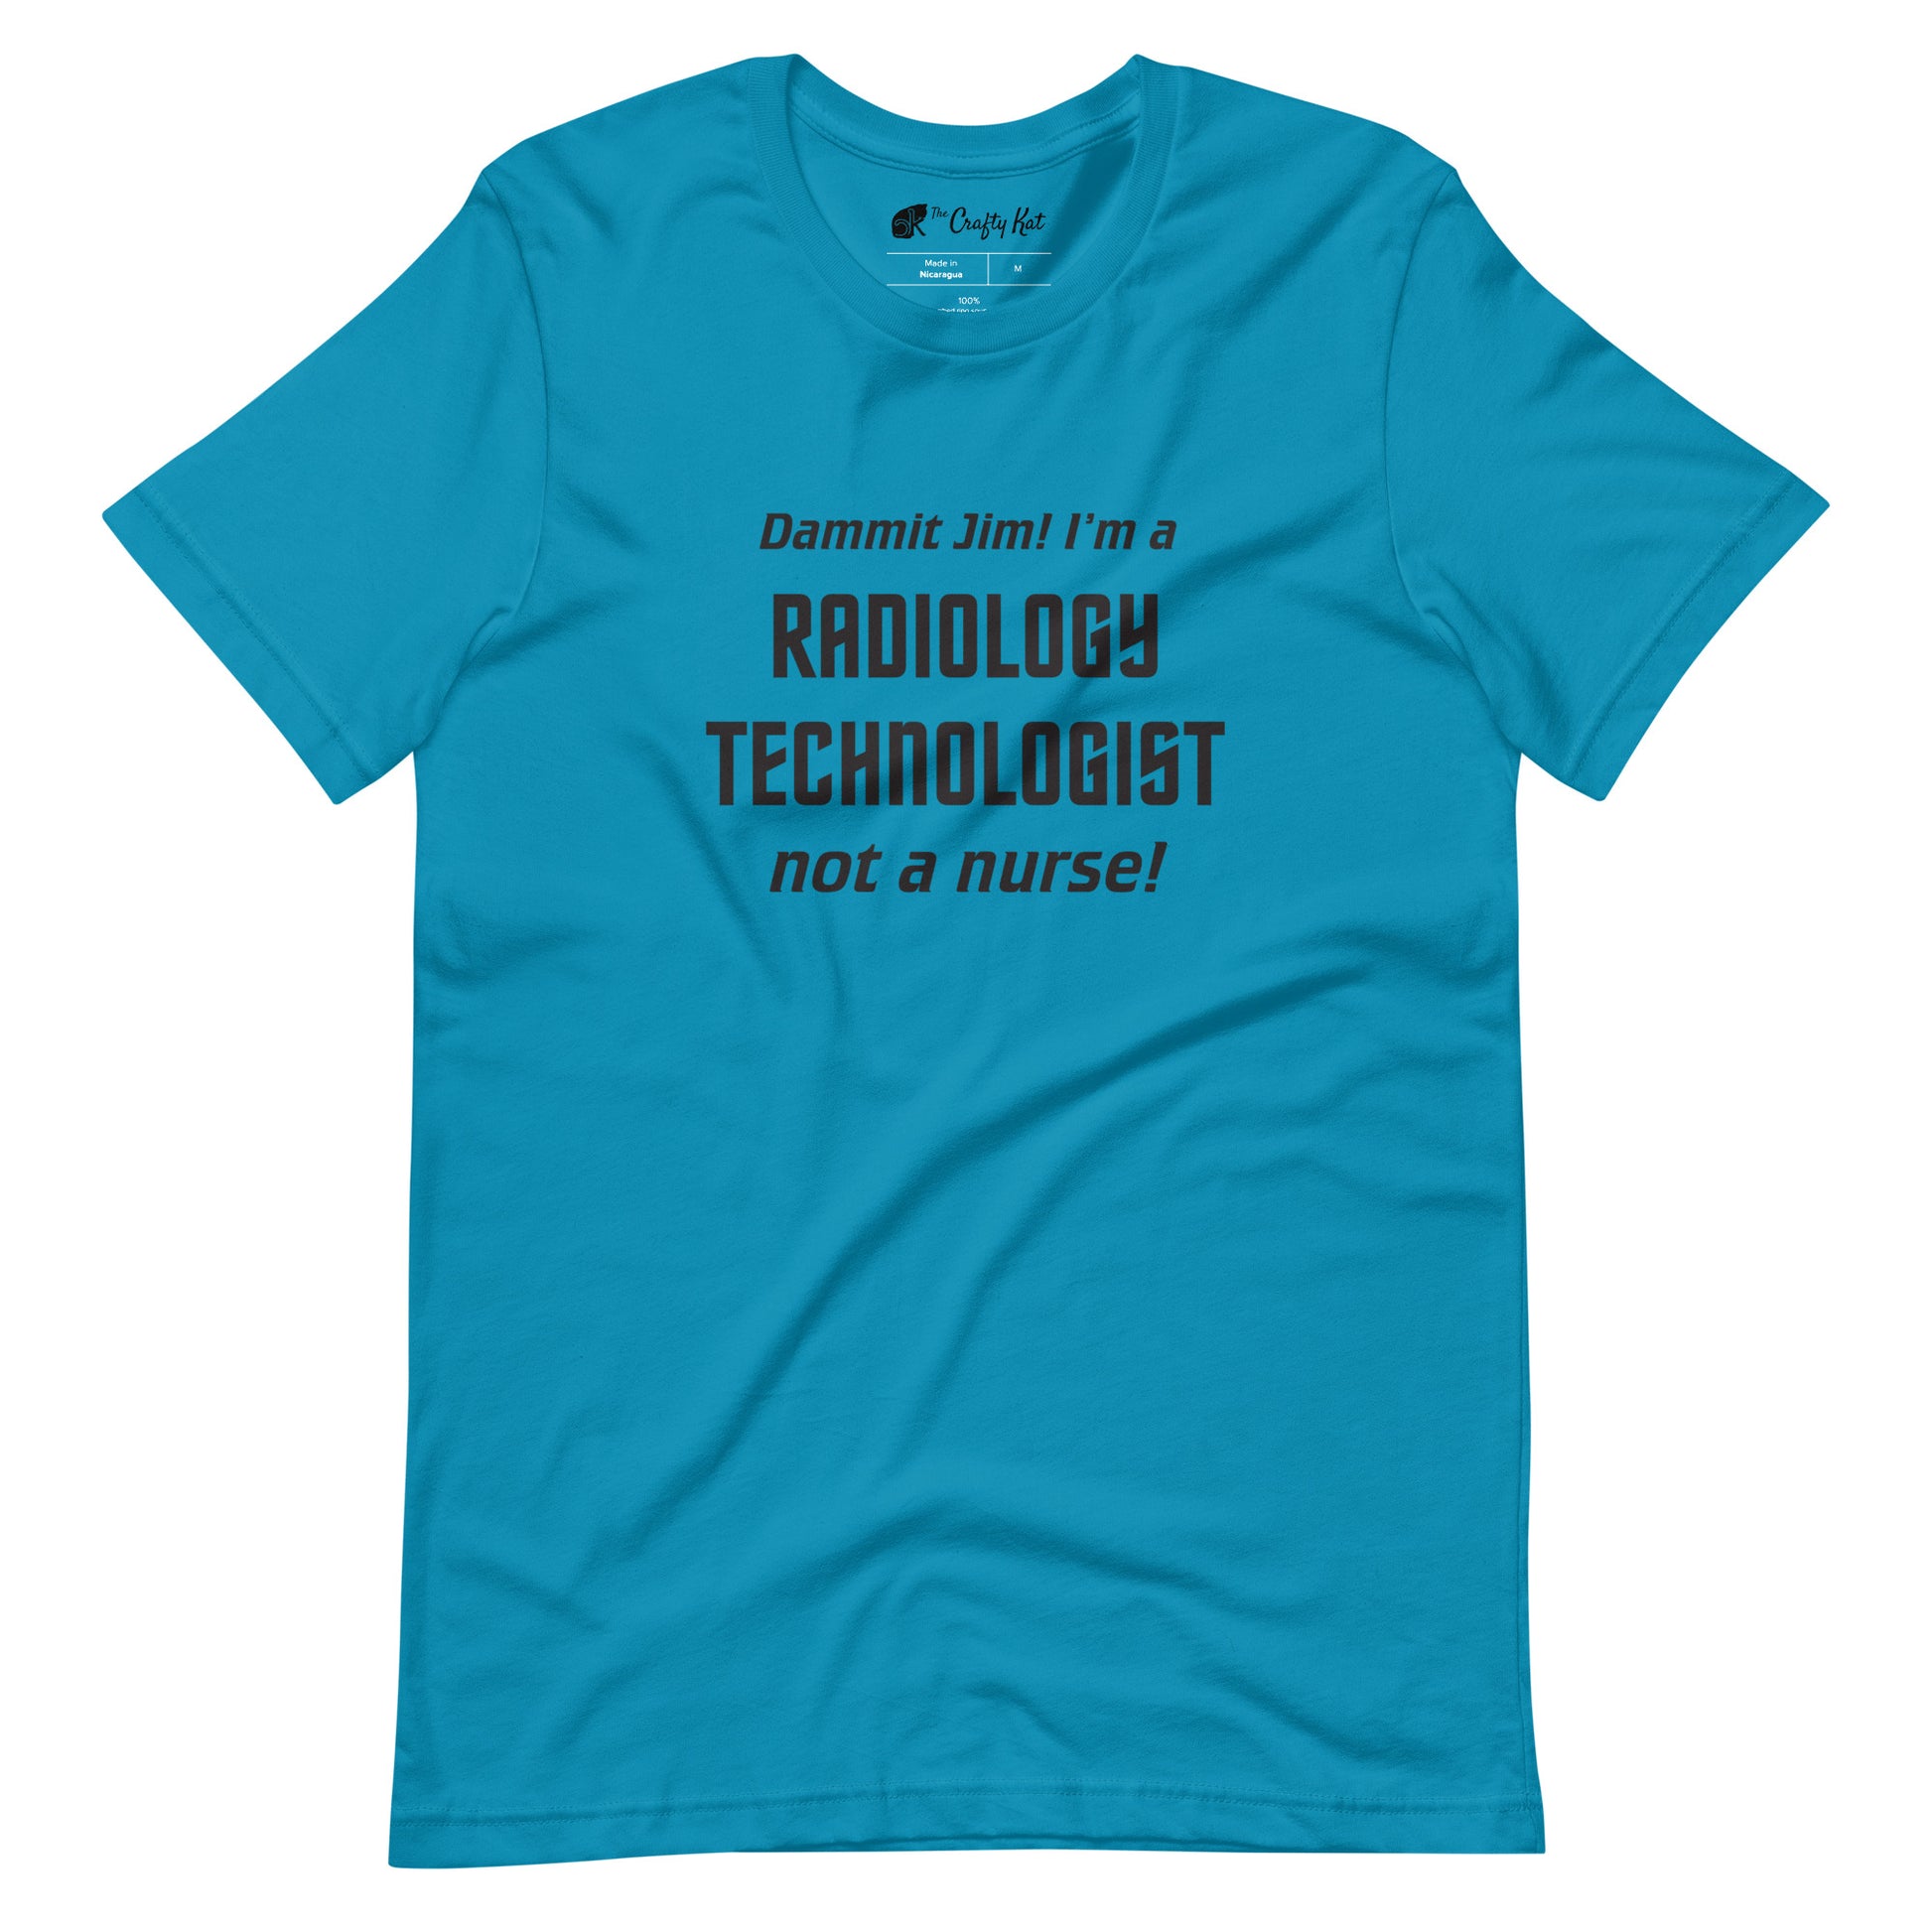 Aqua (cyan) t-shirt with text graphic in Star Trek font: "Dammit Jim! I'm a RADIOLOGY TECHNOLOGIST not a nurse!"